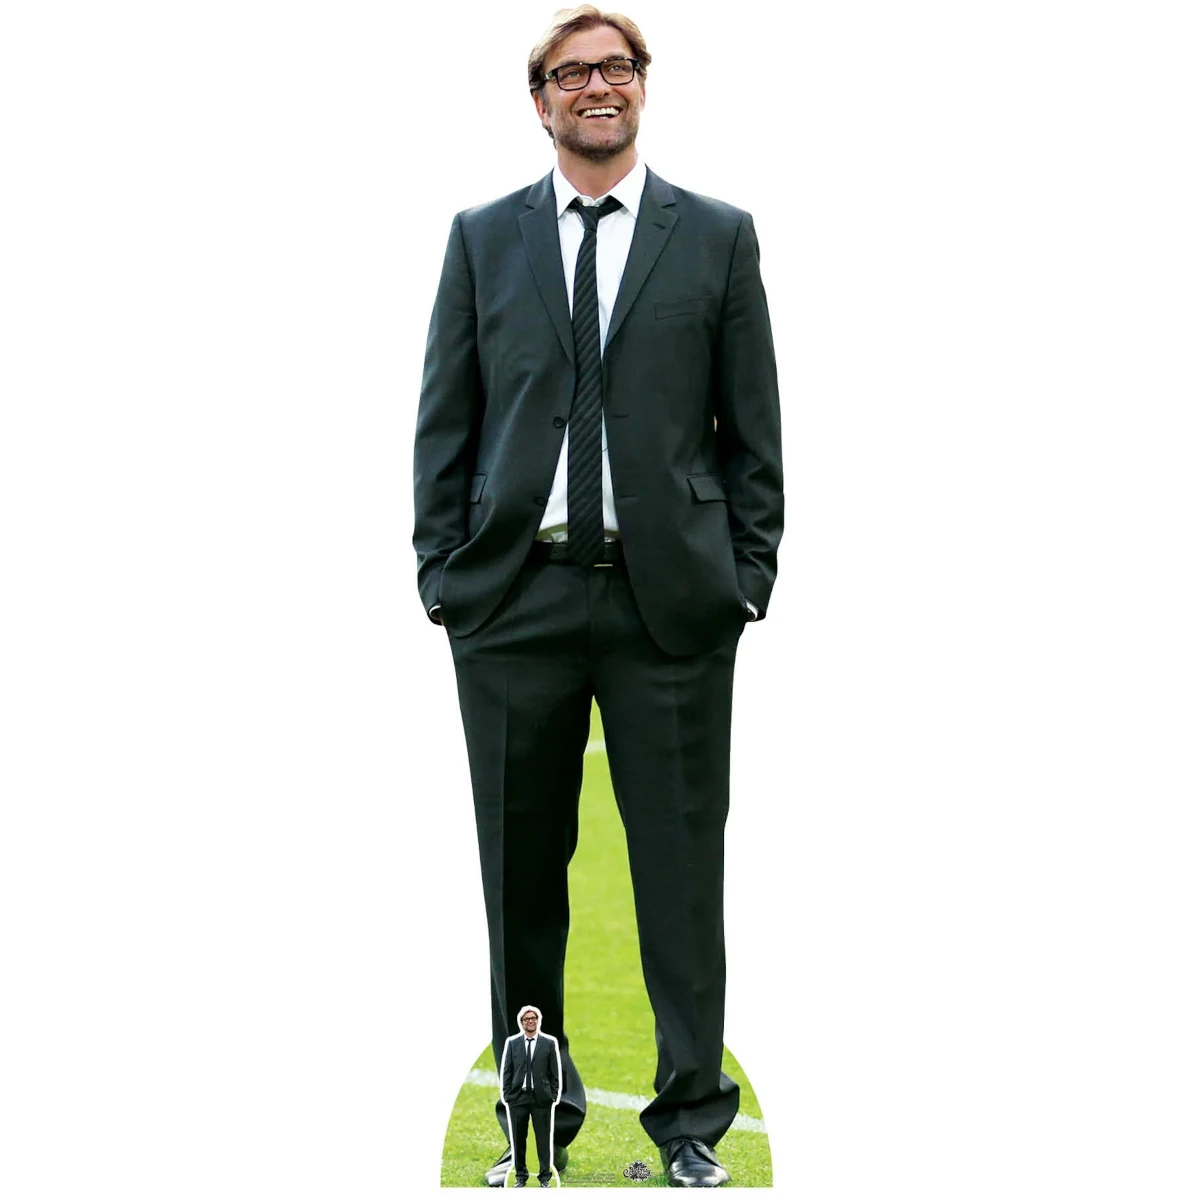 CS791 Jurgen Klopp 'Suit' (German Football Manager) Lifesize + Mini Cardboard Cutout Standee Front